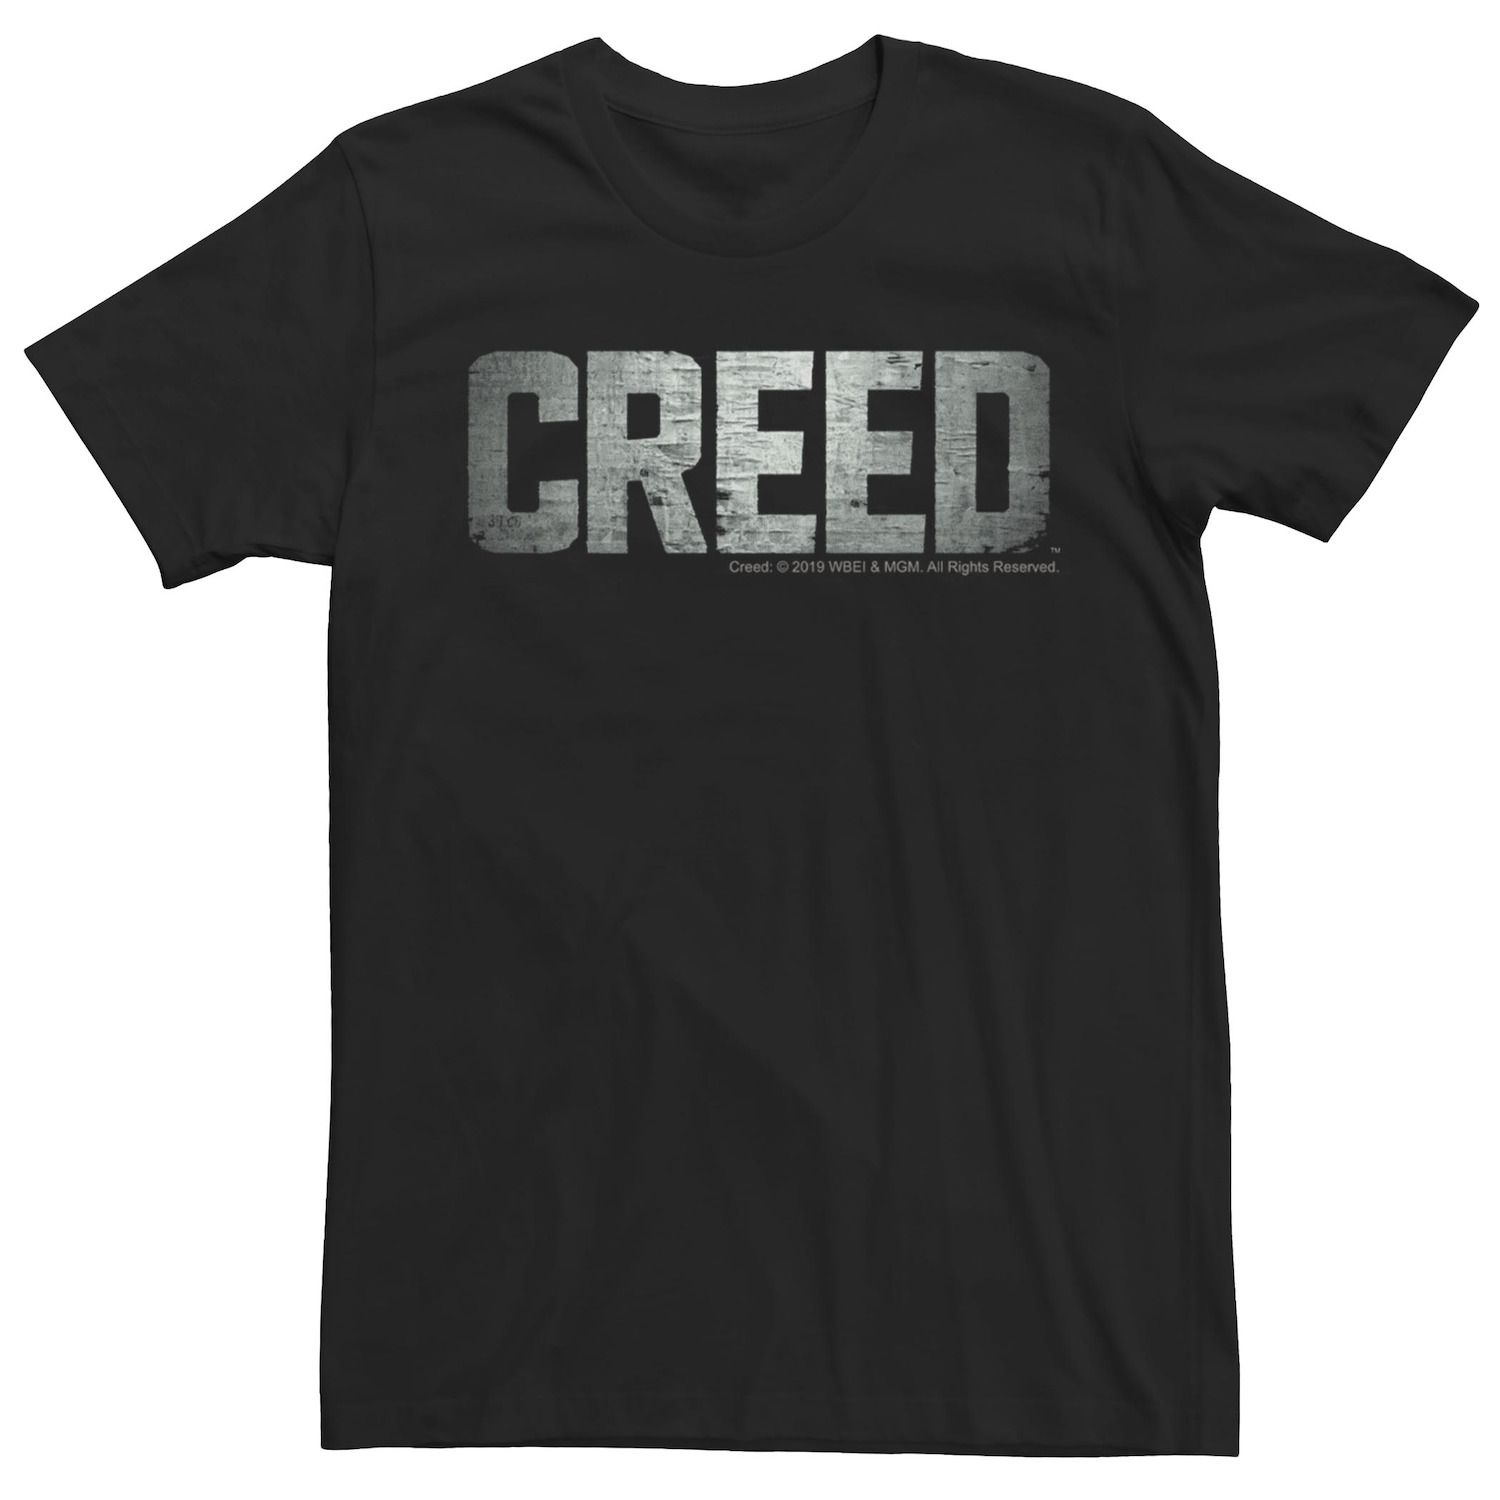 Мужская винтажная спортивная футболка Creed с лентой Licensed Character